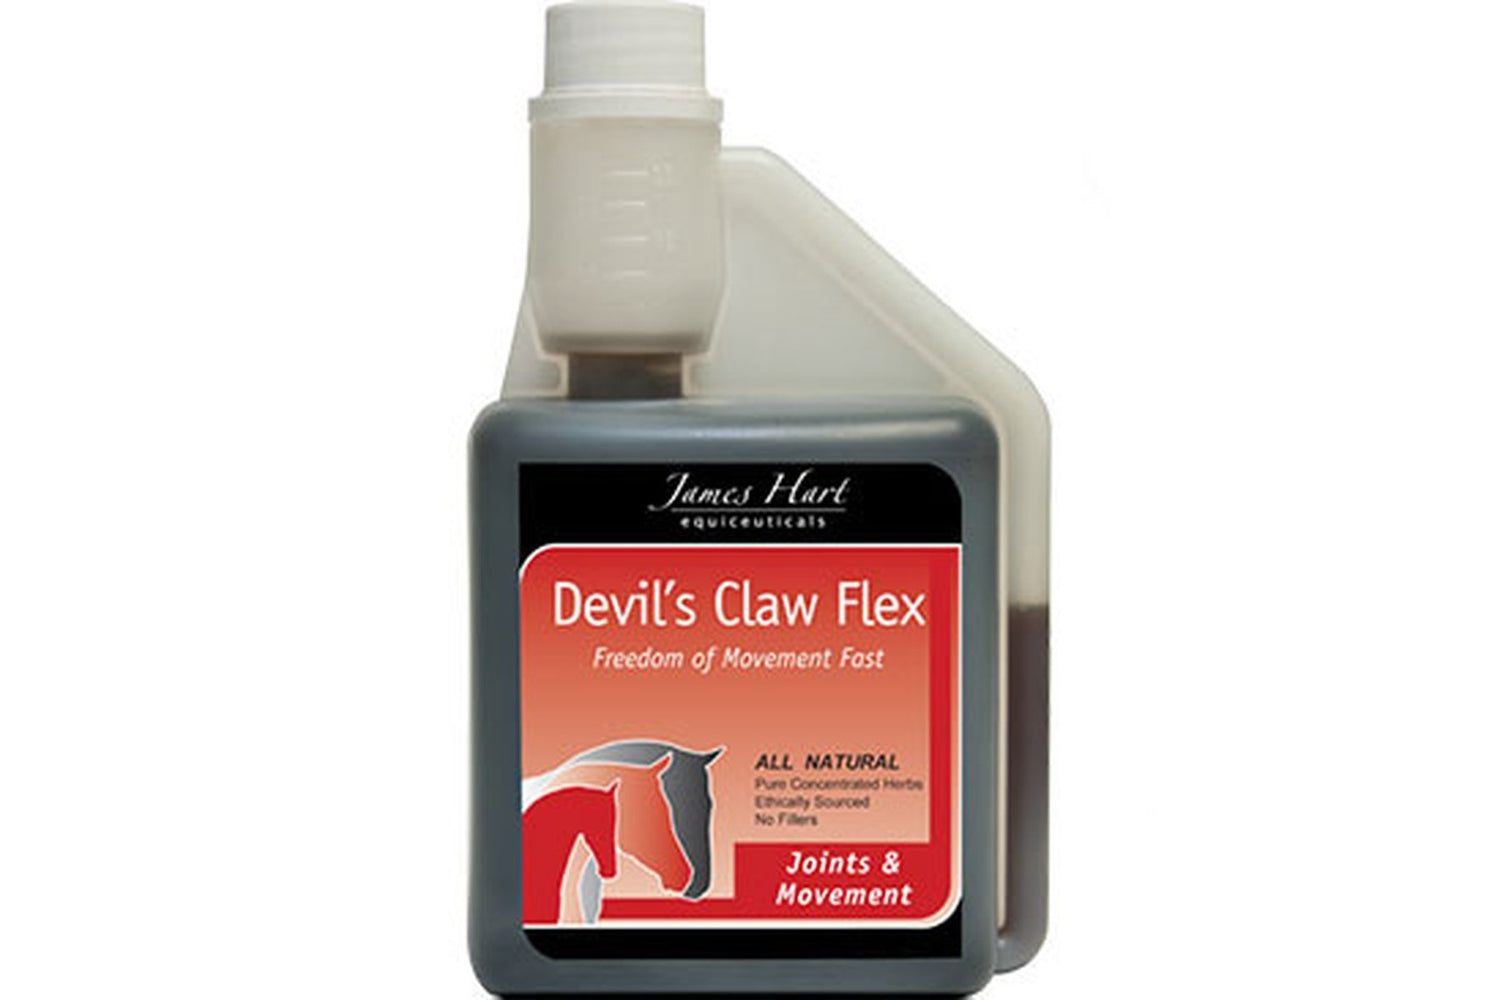 James Hart Devils Claw Flex